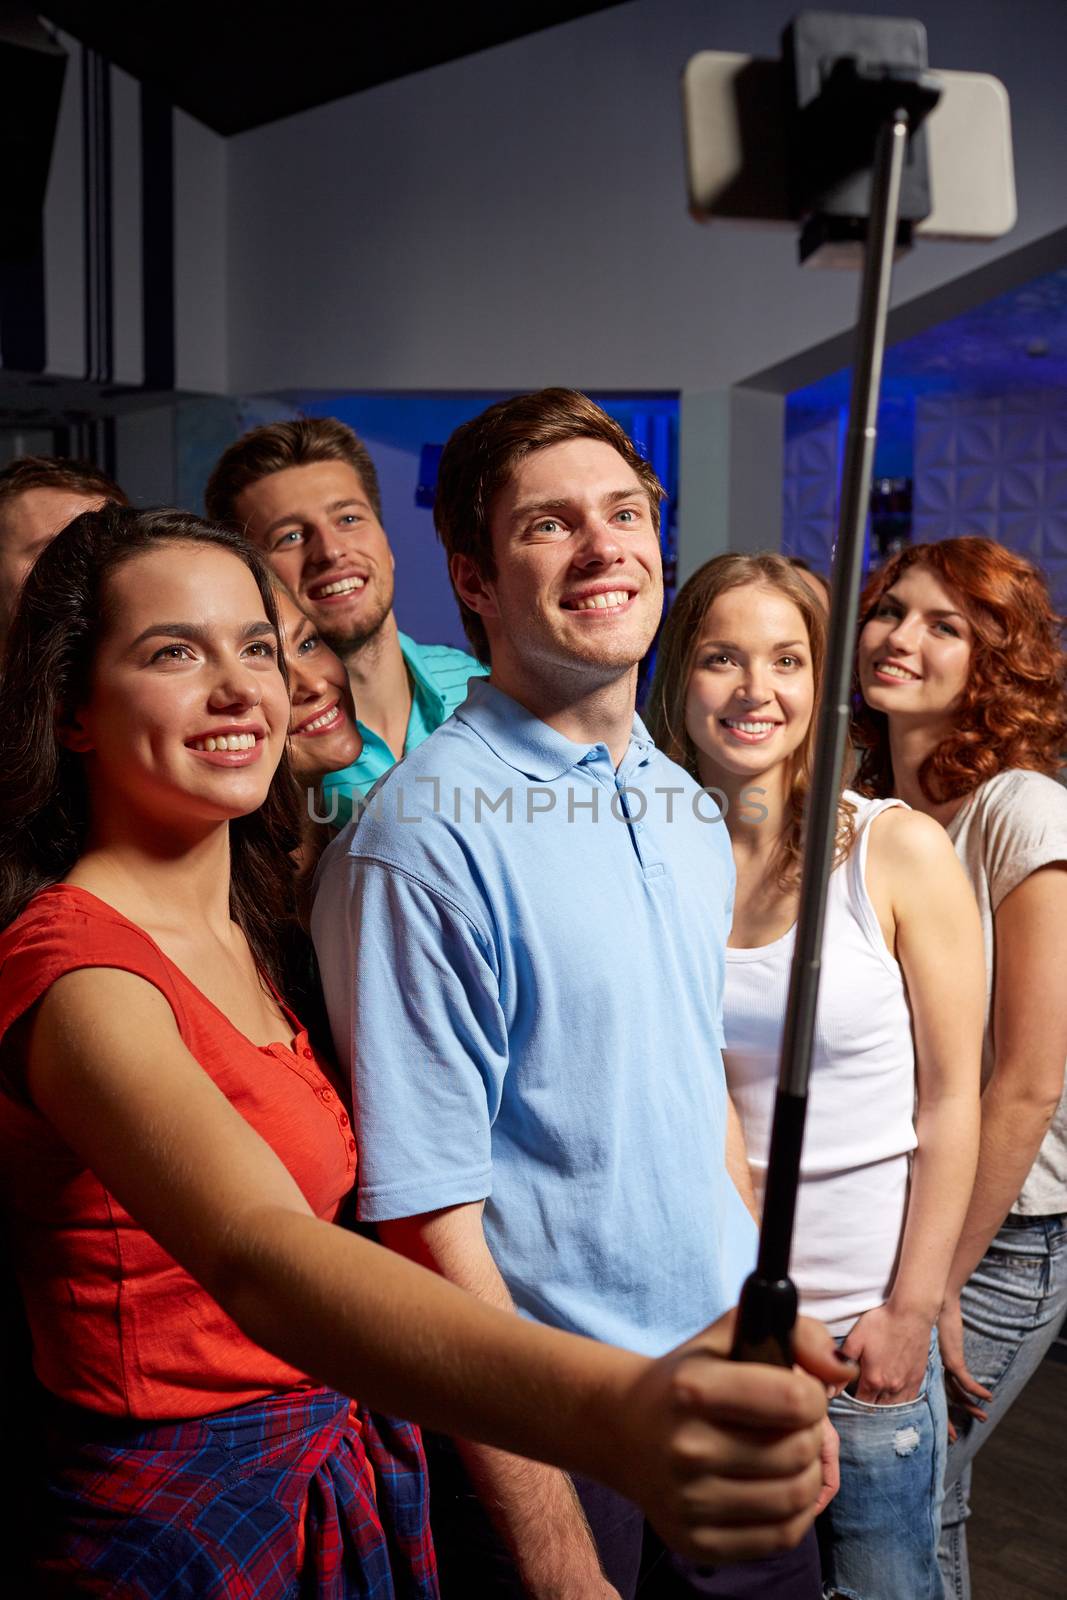 friends with smartphone taking selfie in club by dolgachov